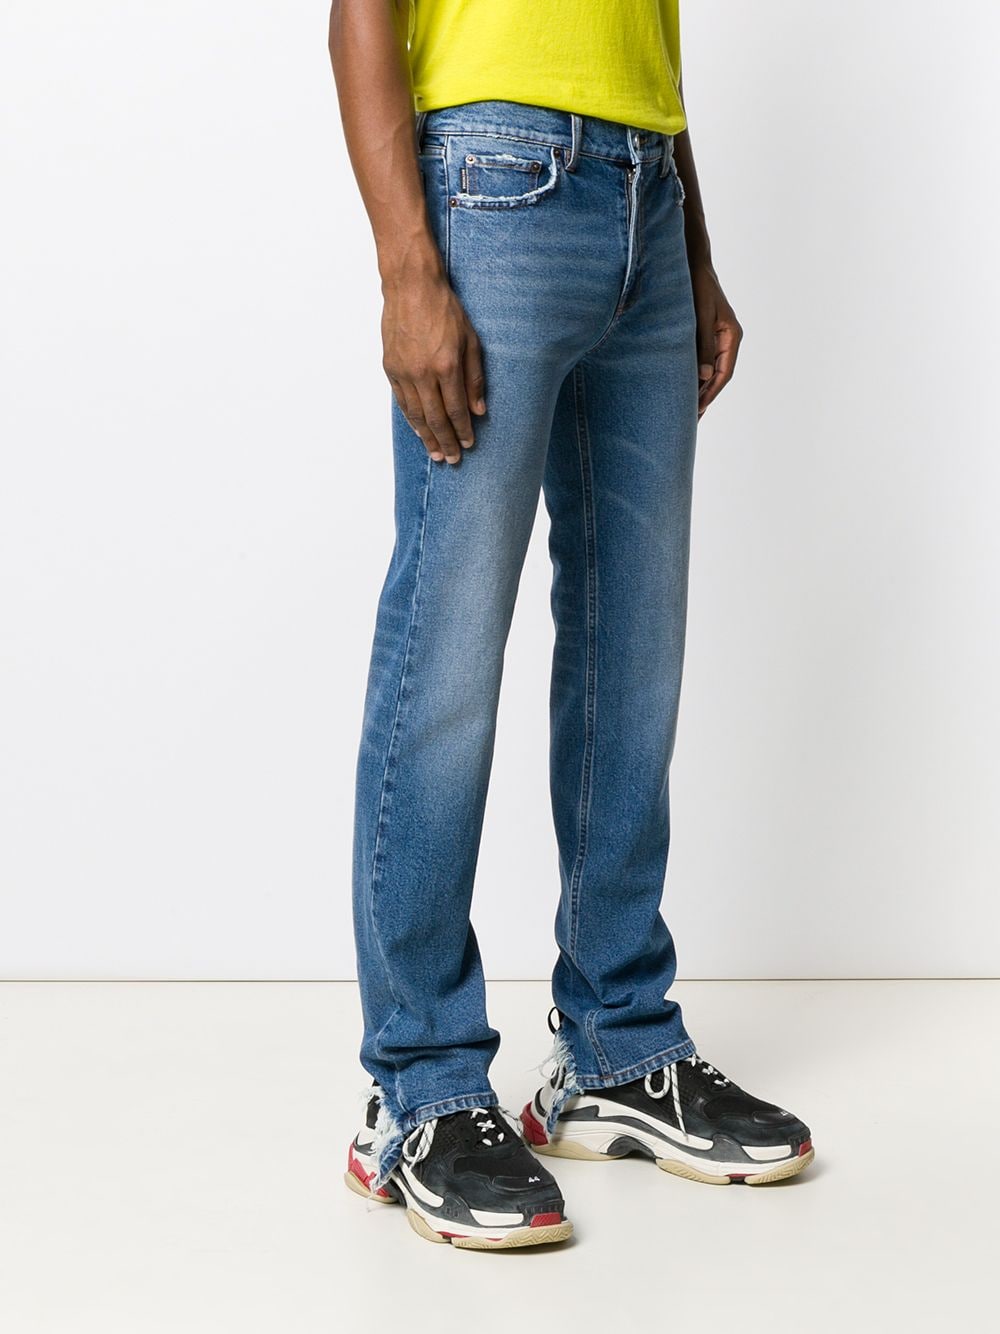 фото Balenciaga джинсы узкого кроя с пятью карманами